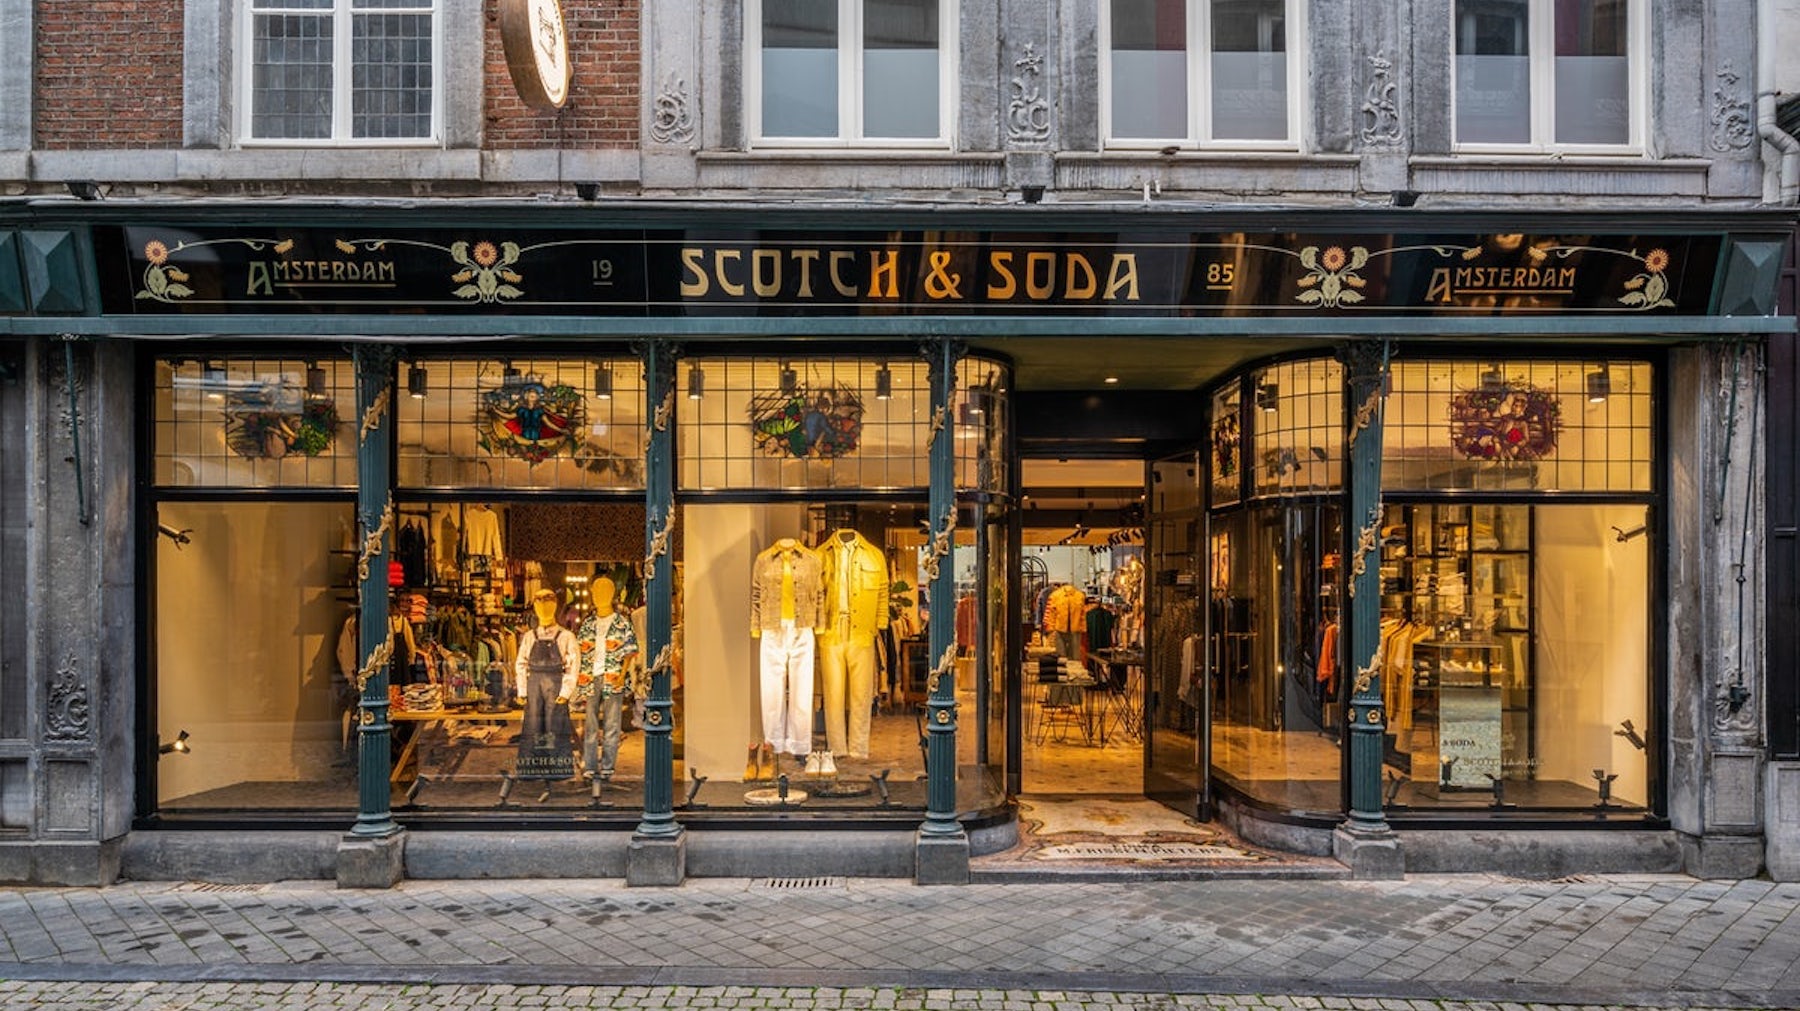 Trillen Kracht smog Fashion Retailer Scotch & Soda Seeks Bankruptcy for Dutch Operations | BoF